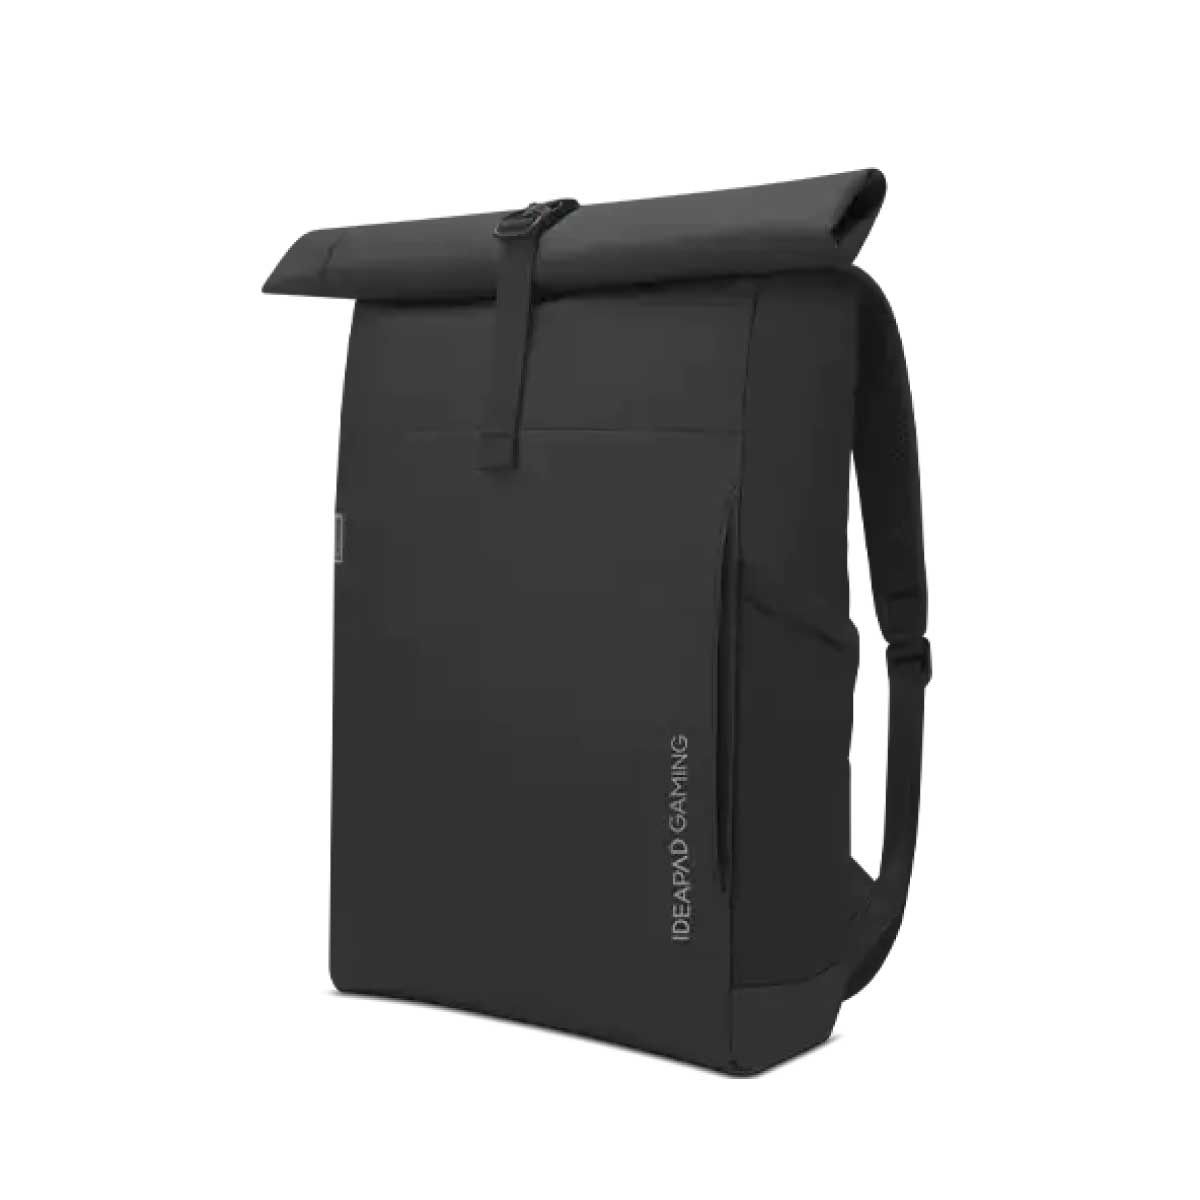 Lenovo IdeaPad Gaming Modern Backpack BK LNV-GX41H70101